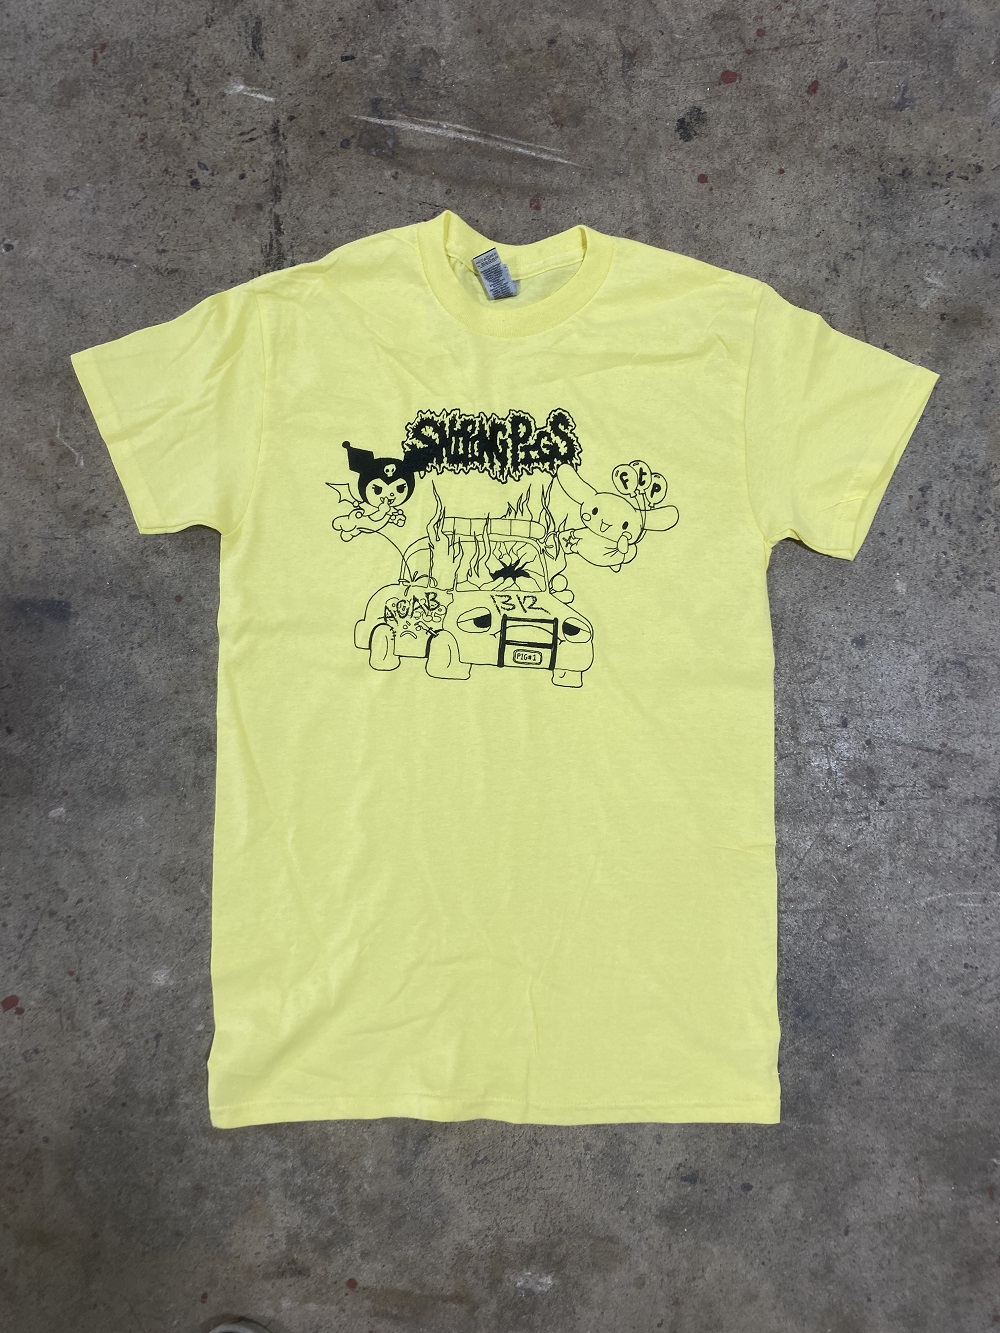 Sniping Pigs - Sanrio Car Bomb Shirt (XL)